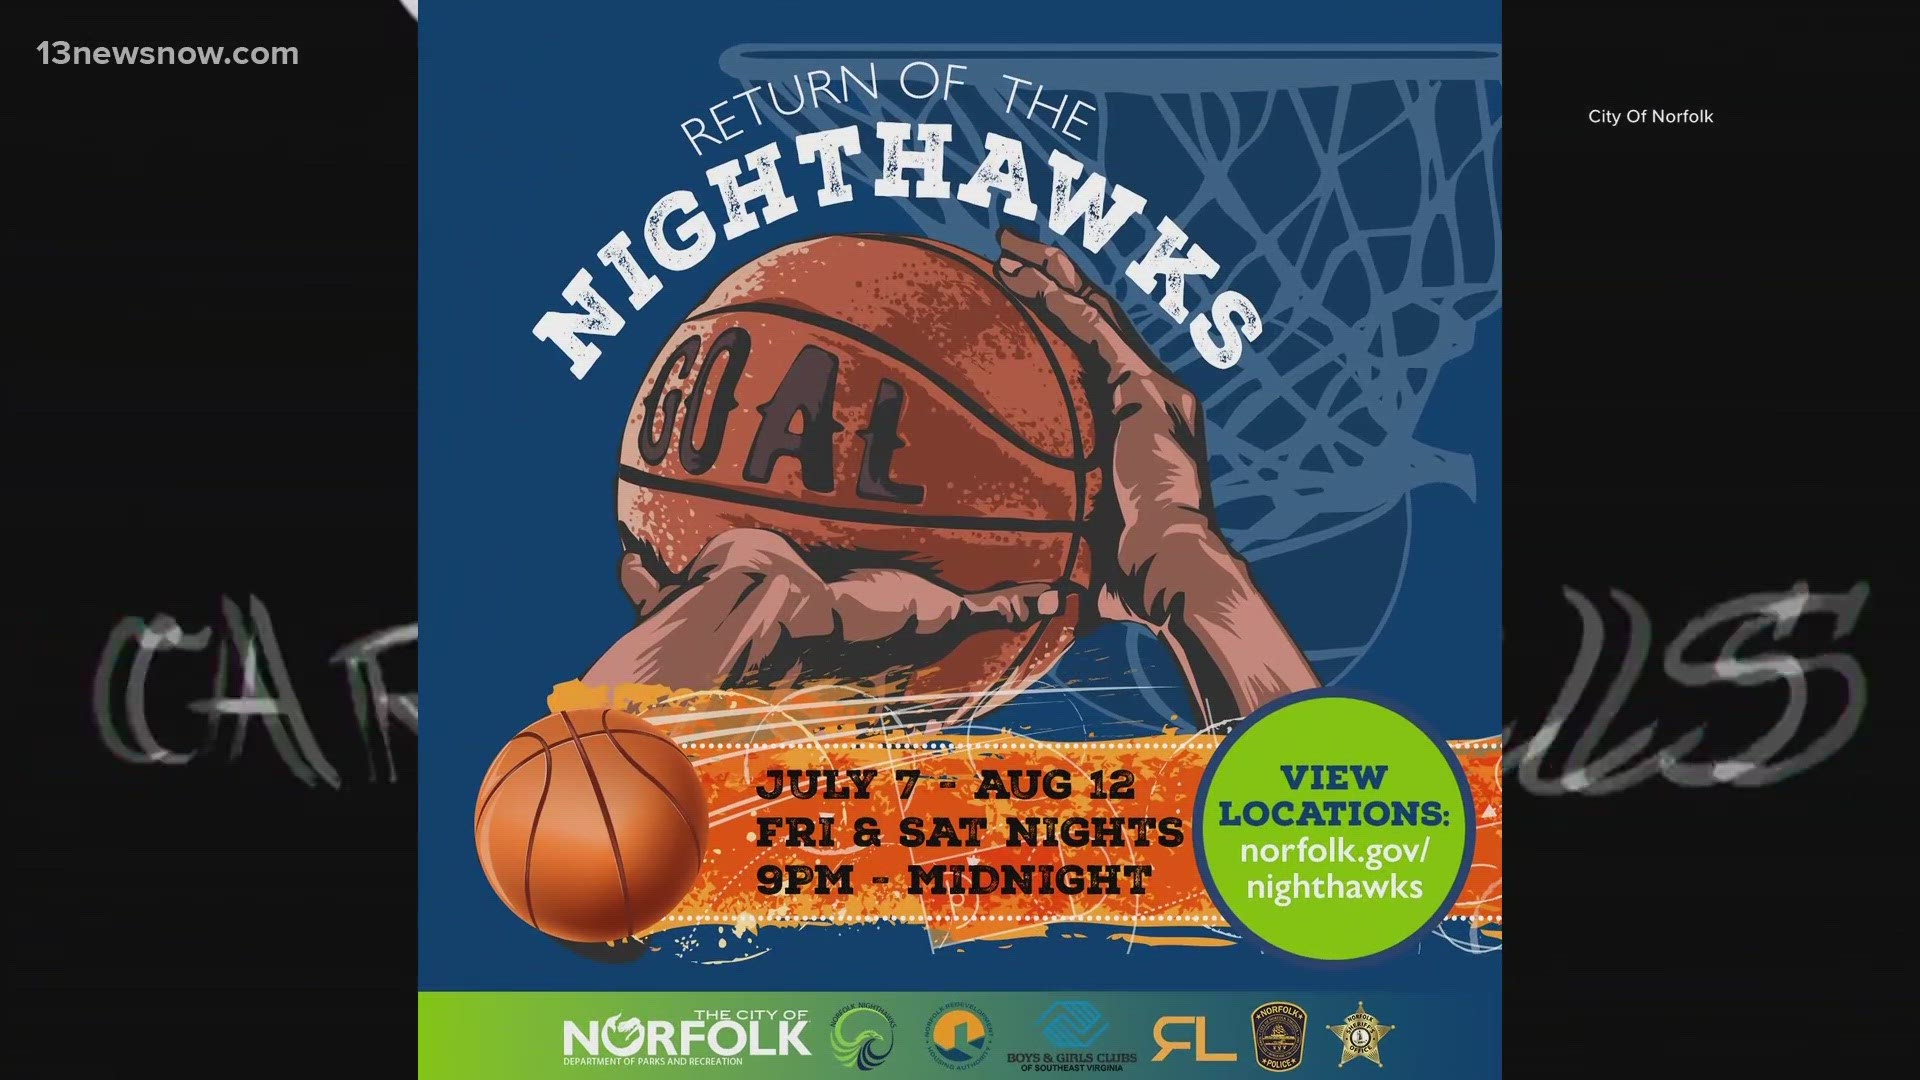 Building safer communities through basketball! The popular "Norfolk Nighthawks" program returns this weekend.